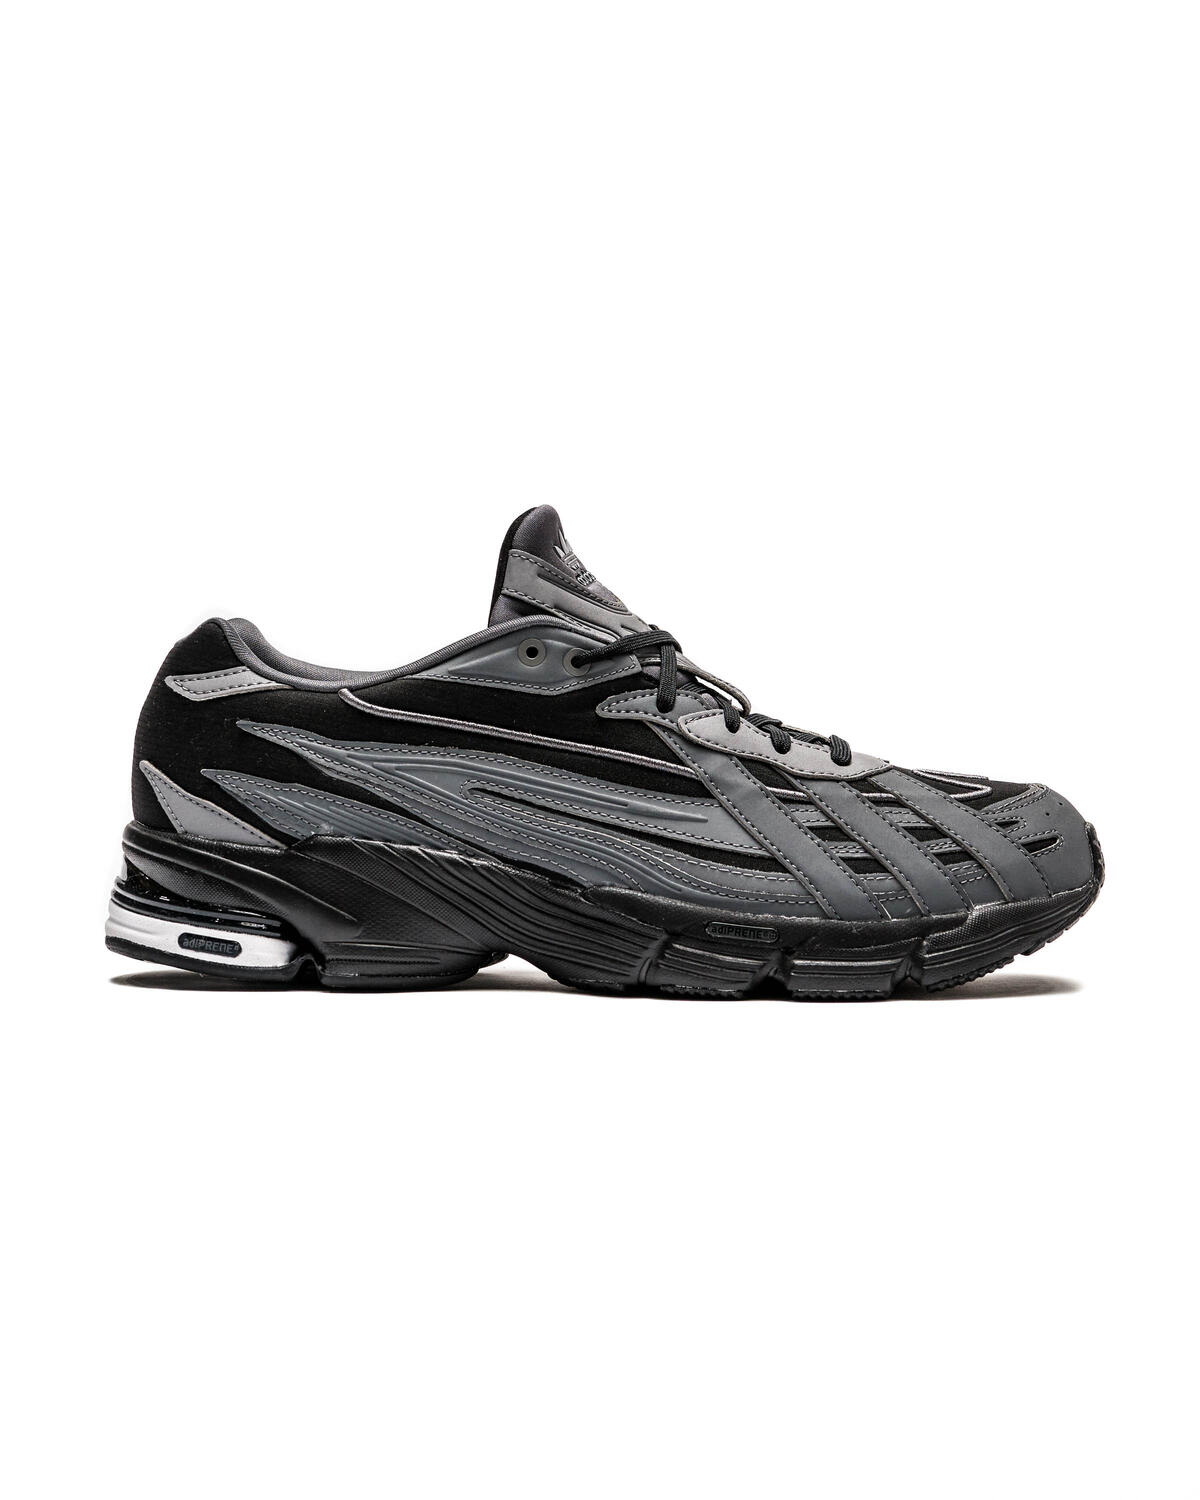 Nike TN Air Max Plus Requin Noir Chaussures Hommes Sportif 41 42 43 44 45  Basket